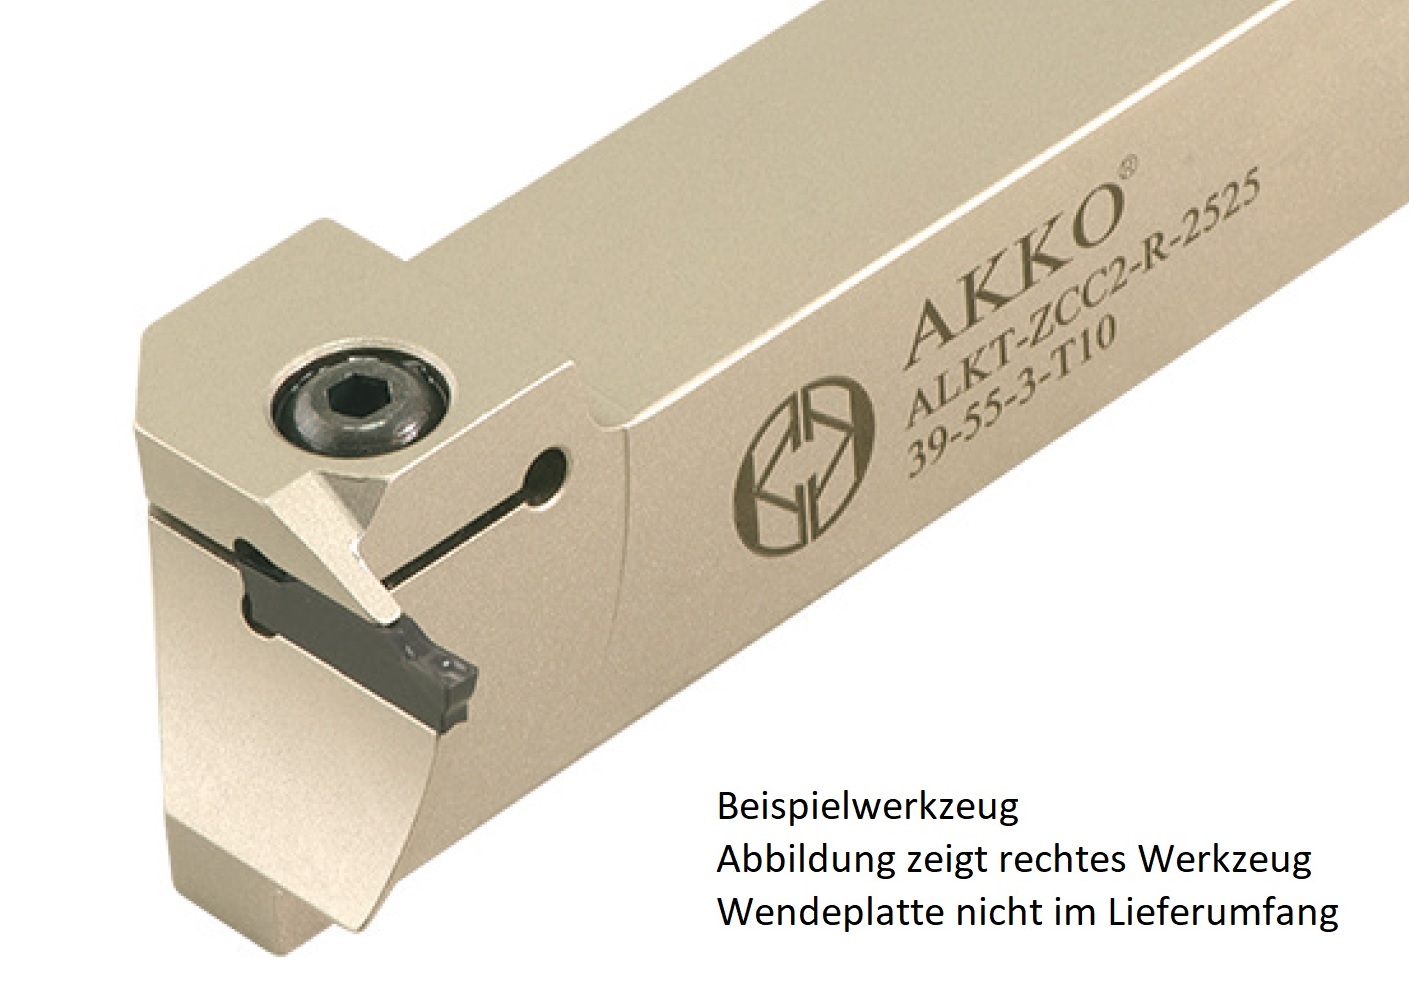 AKKO-Axial-Stechhalter L-Typ, kompatibel mit ZCC-Stechplatte Z.GD-4
Schaft-ø 25x25, Einstechbereich ø 52 - ø 80 mm, links